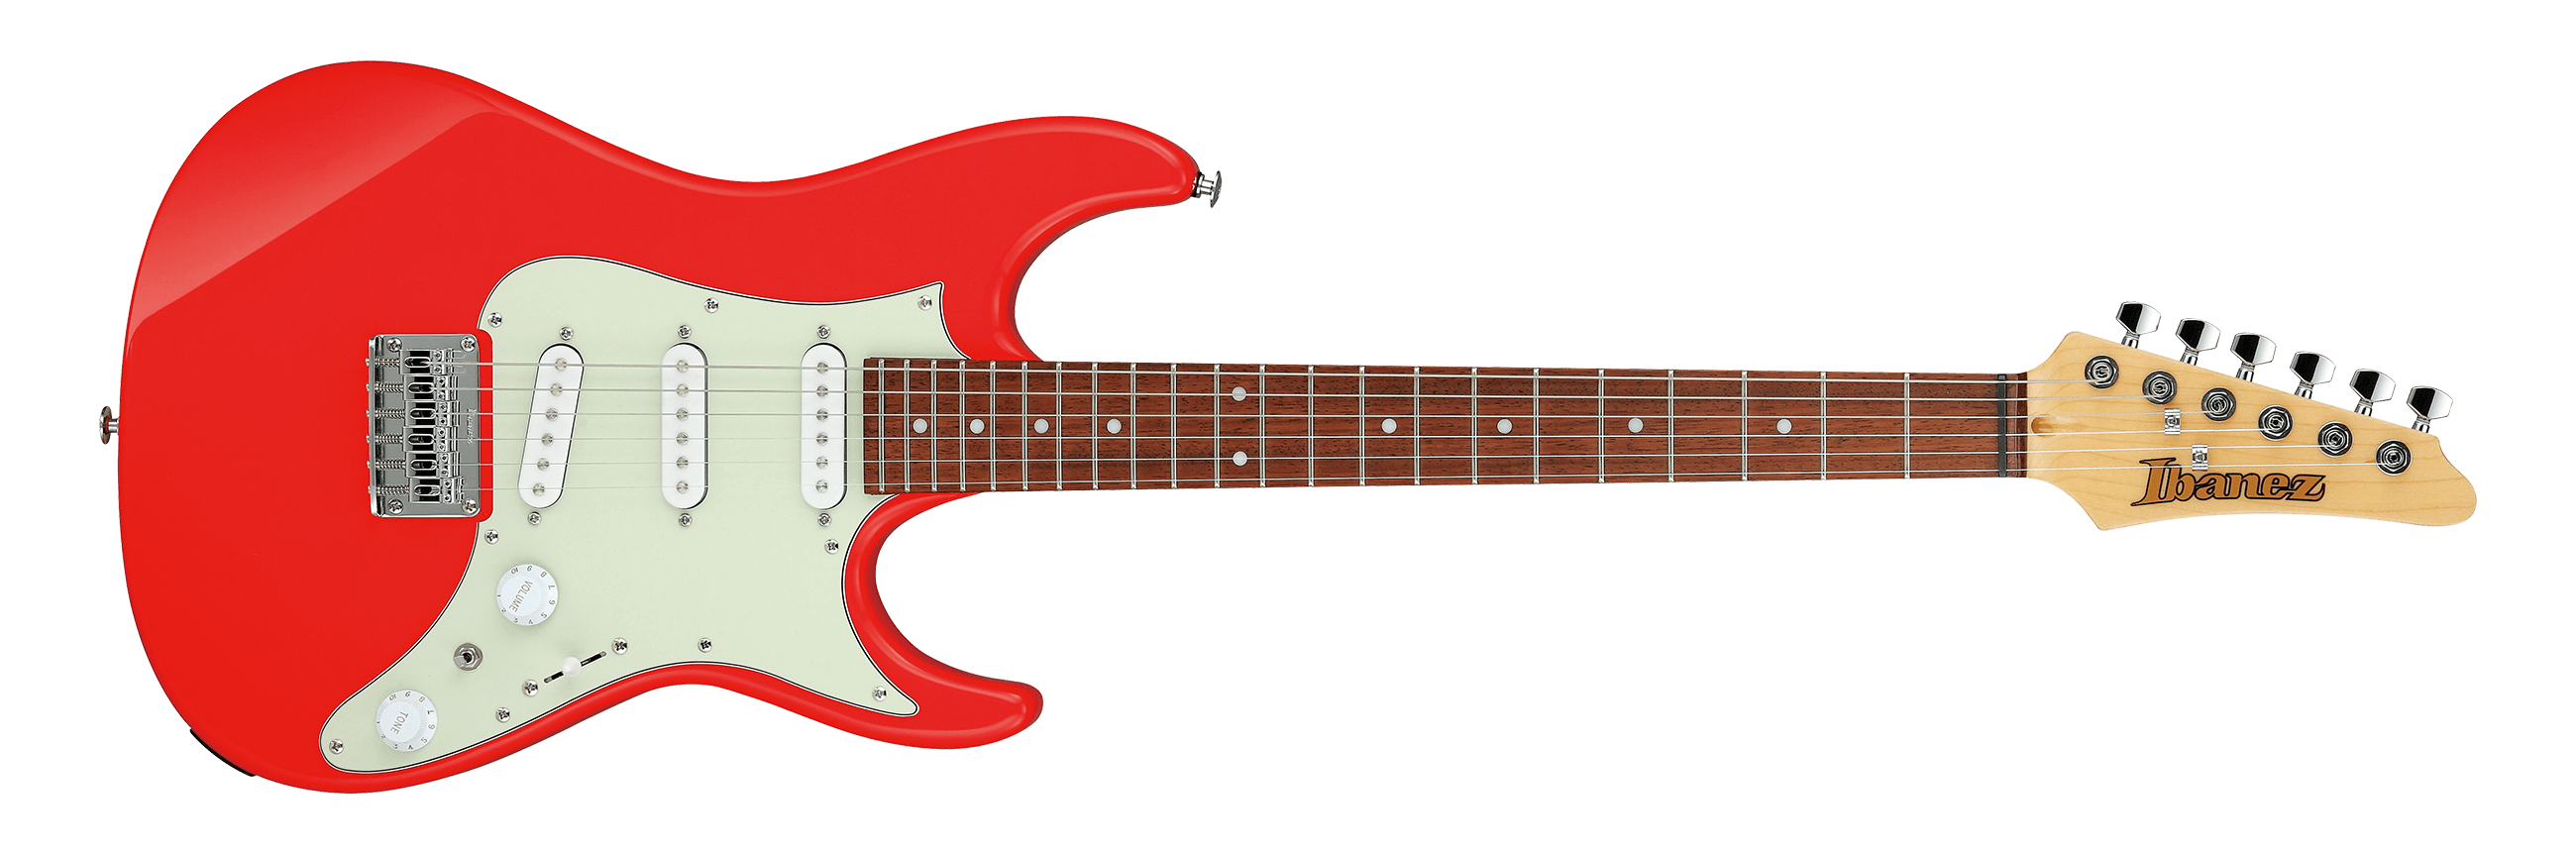 Azes31 Azes Electric Guitars